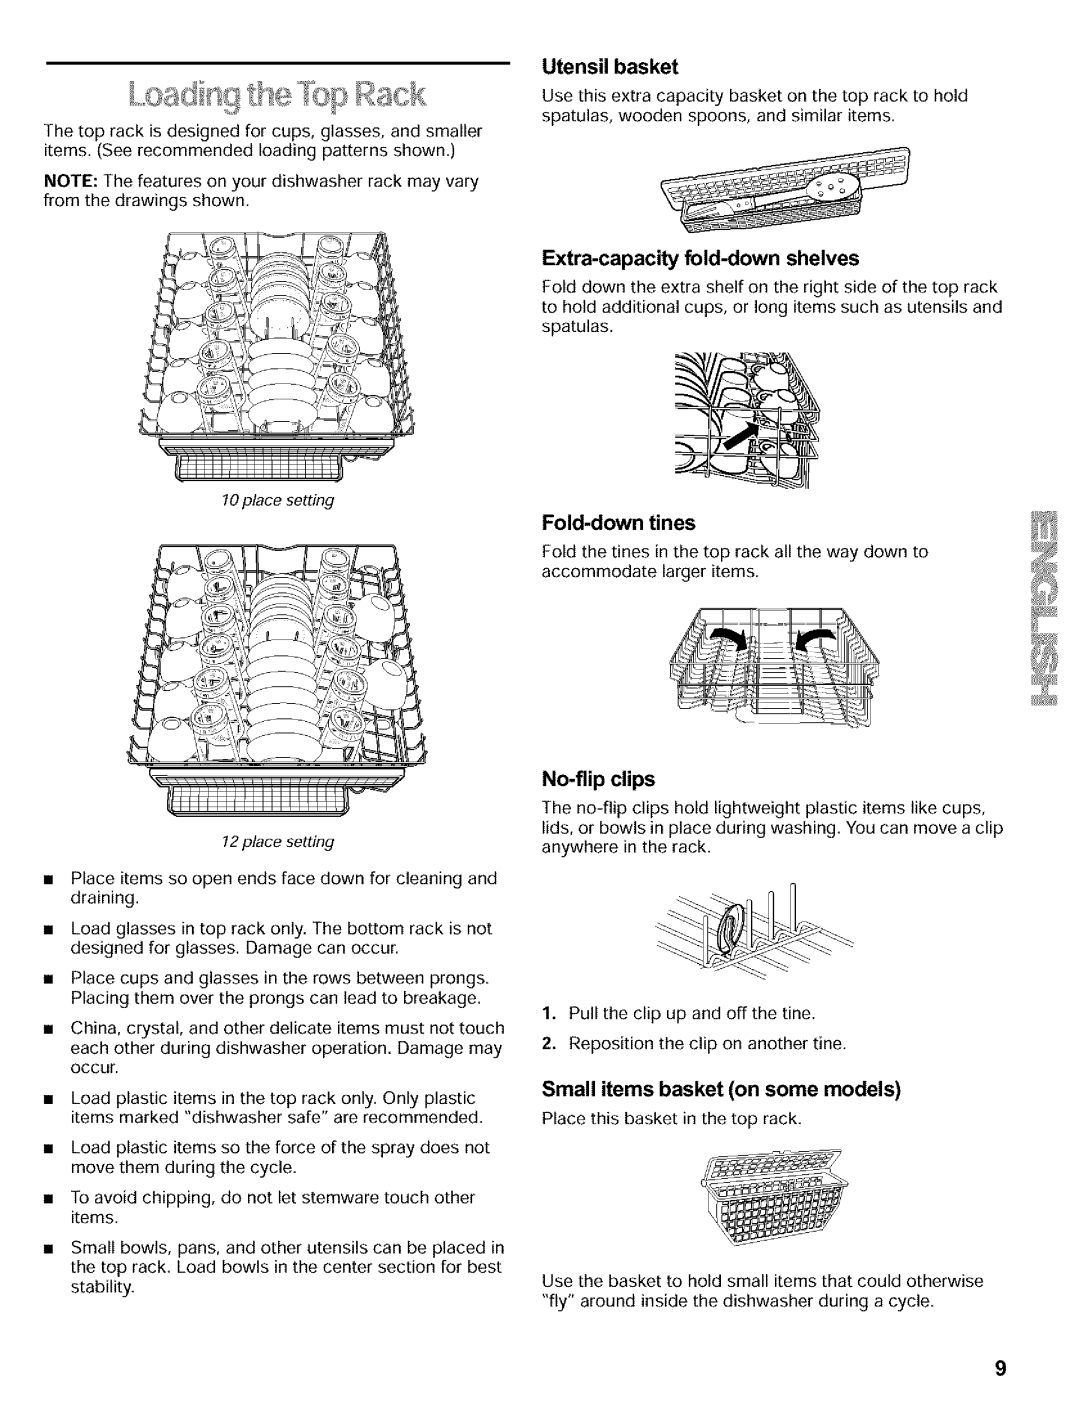 Kenmore 665.16819, 665.15812, 665.16817 manual Utensil basket, Extra-capacity fold-downshelves, No-flipclips, Fold-downtines 